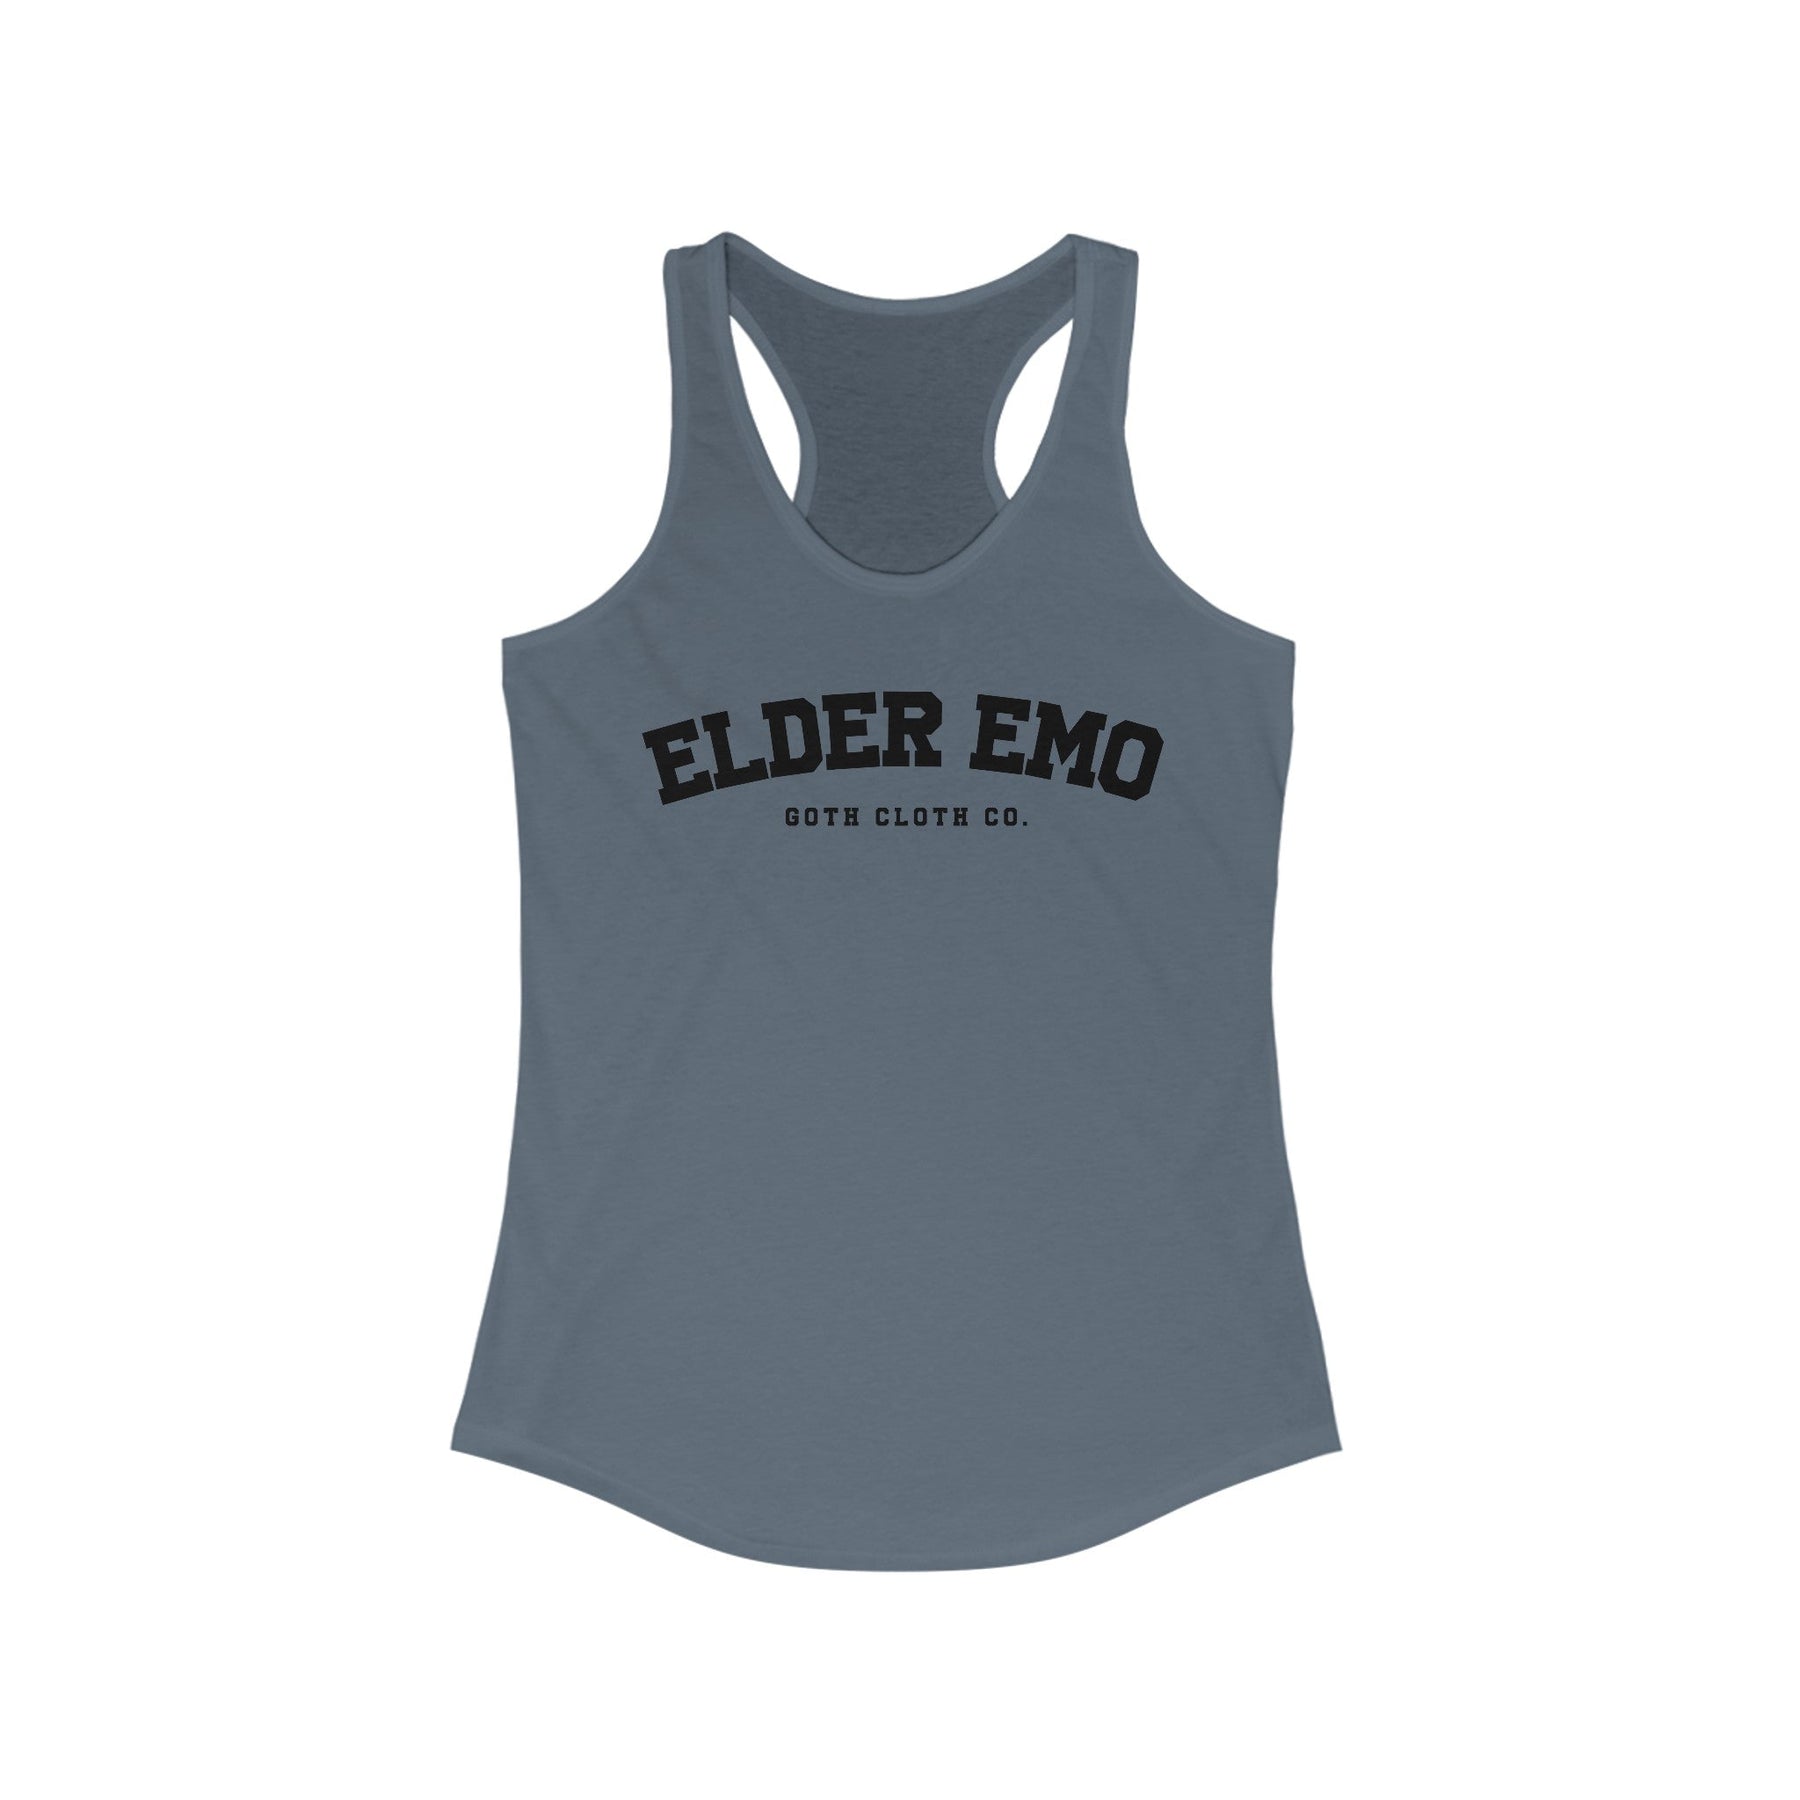 Elder Emo College Women's Racerback Tank - Goth Cloth Co.Tank Top45816251298313789204